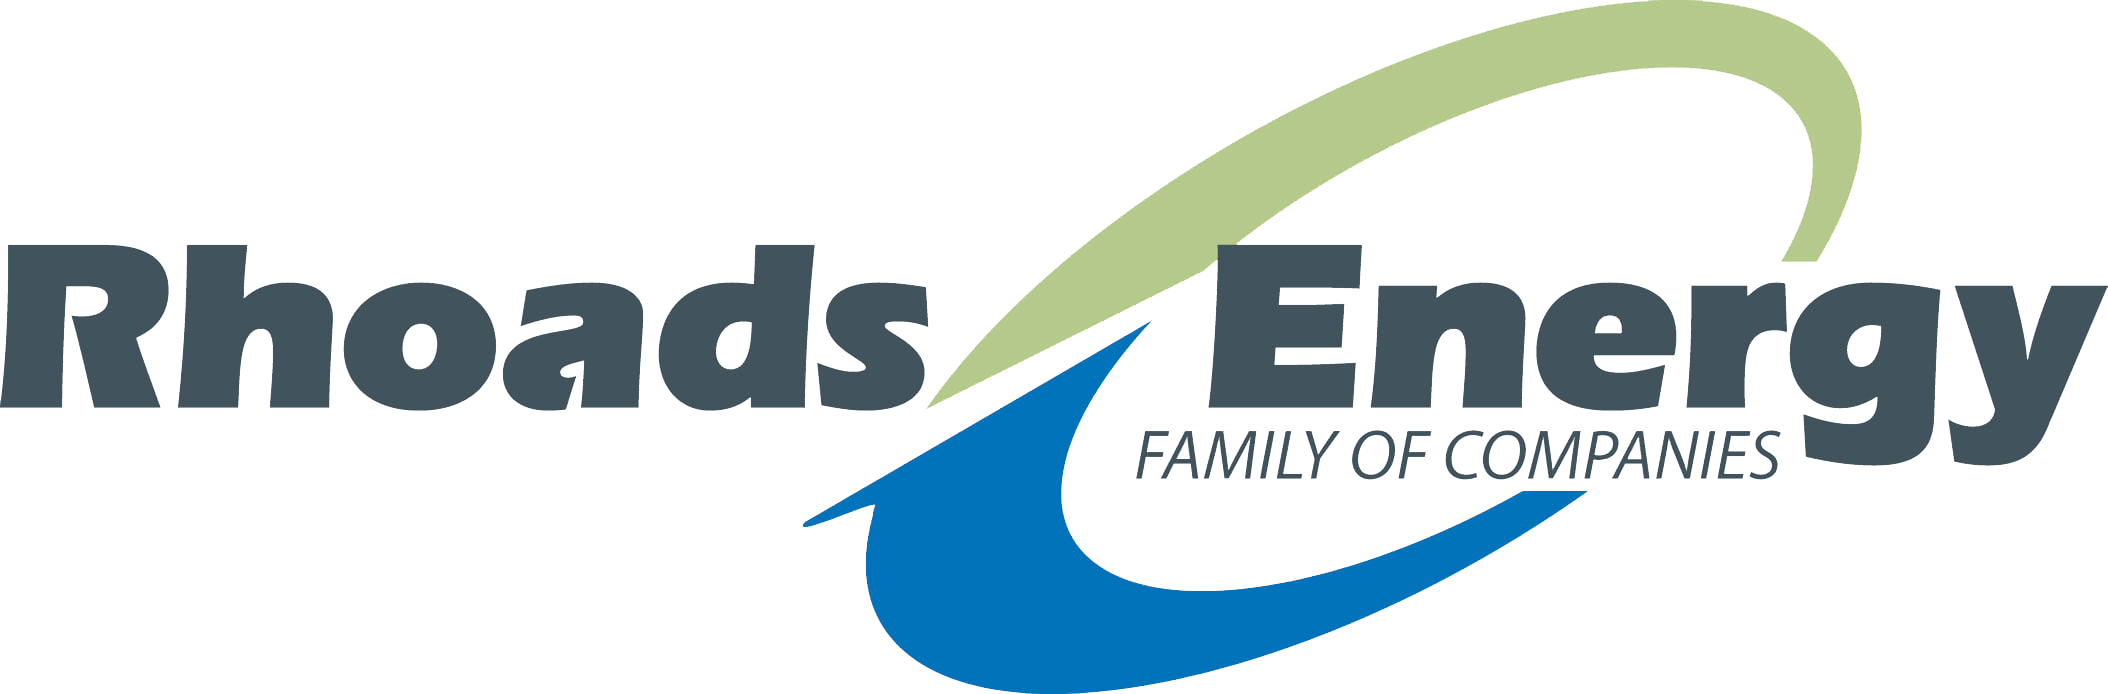 Rhoads Energy Family of Companies